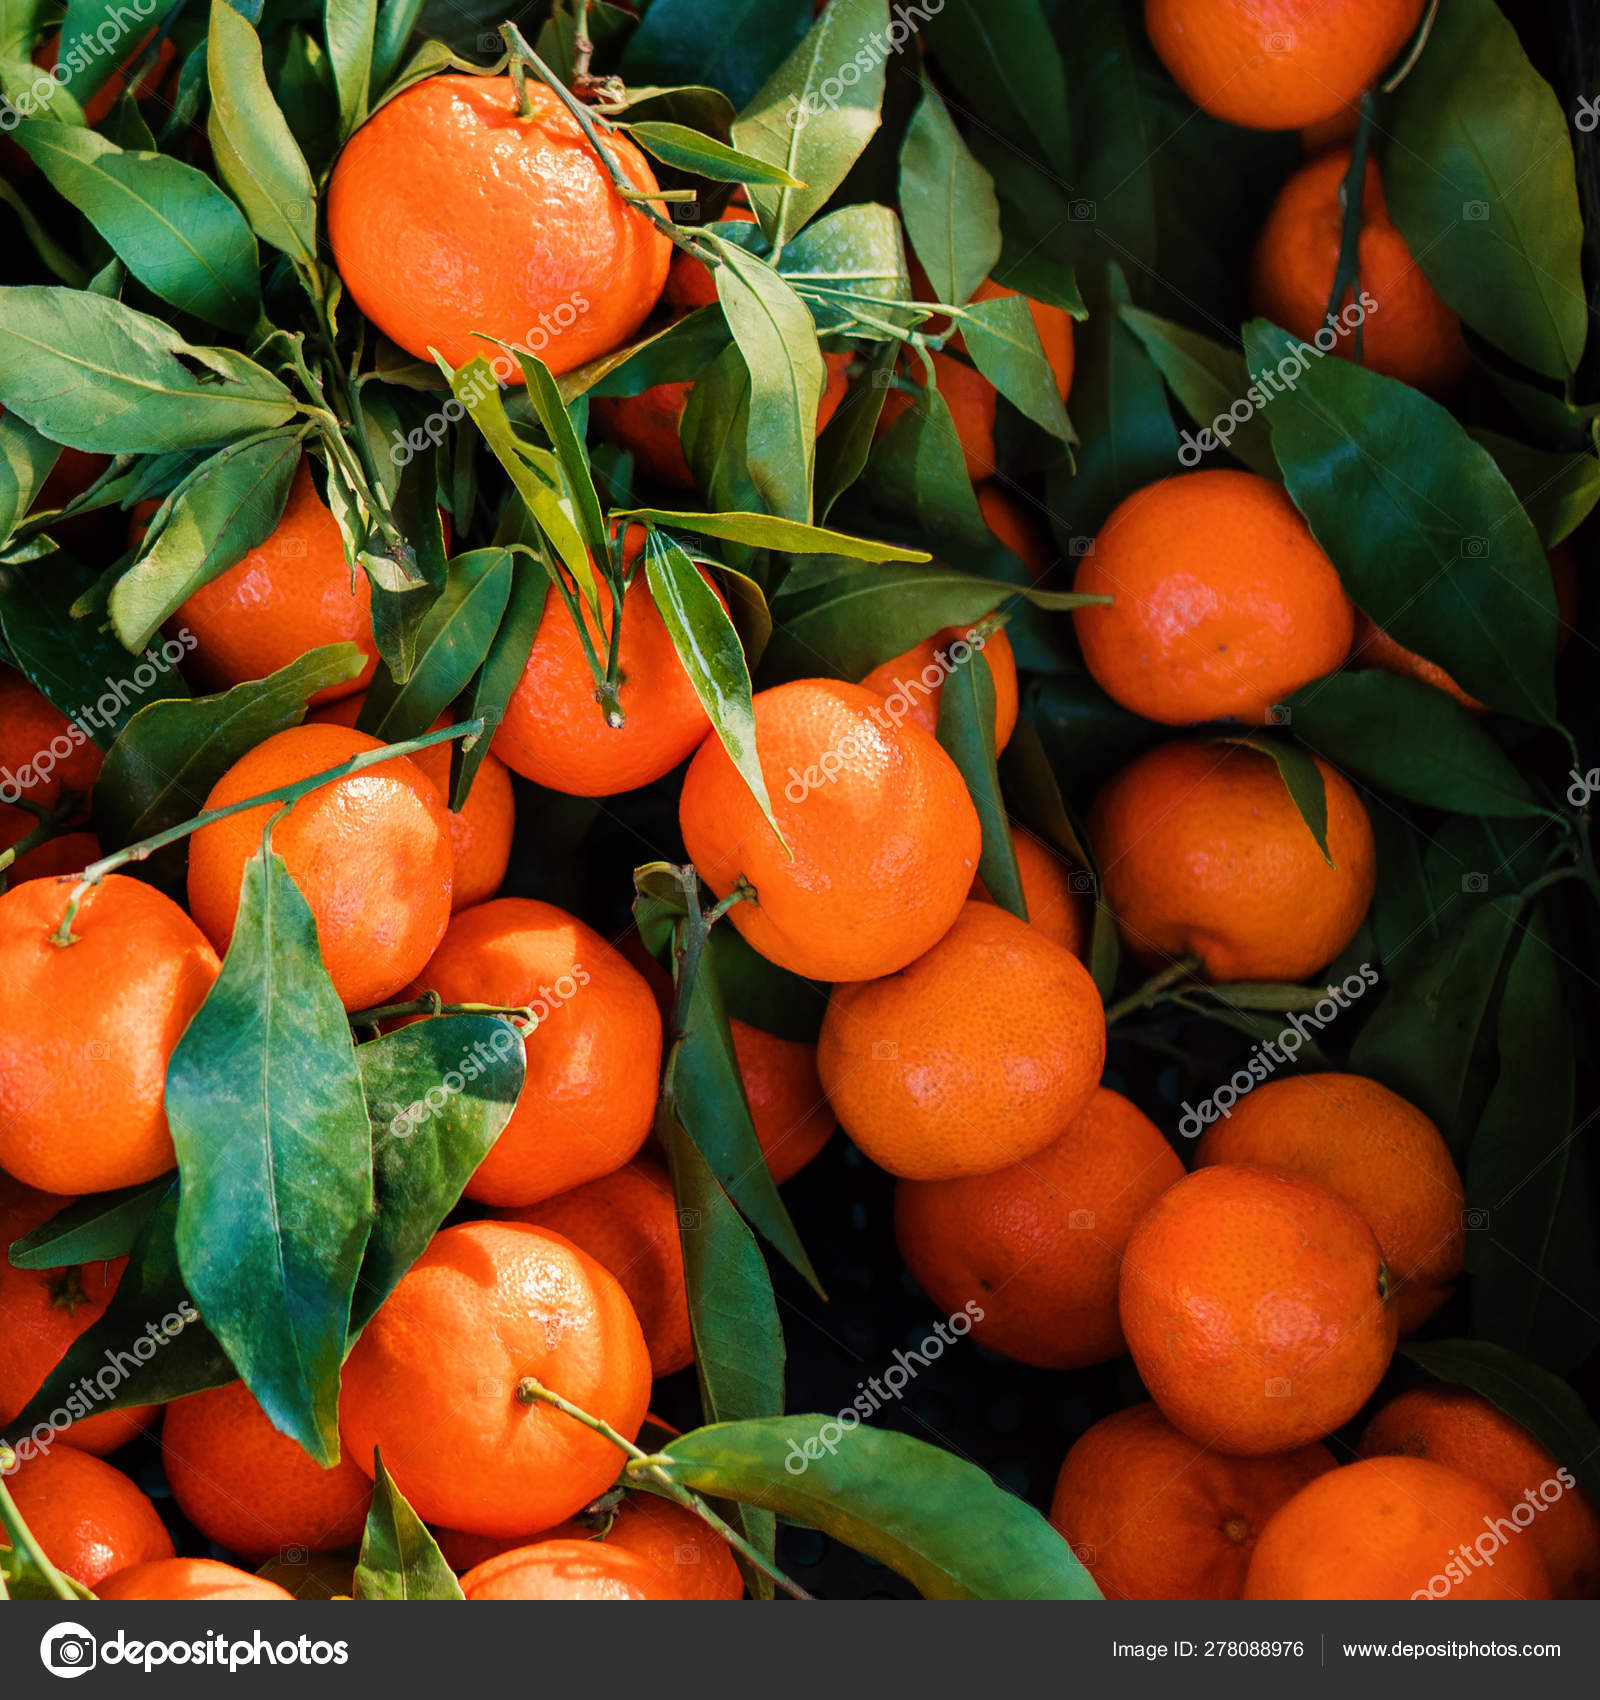 https://st4.depositphotos.com/2370557/27808/i/1600/depositphotos_278088976-stock-photo-mandarines-tangerine-or-clementine-with.jpg